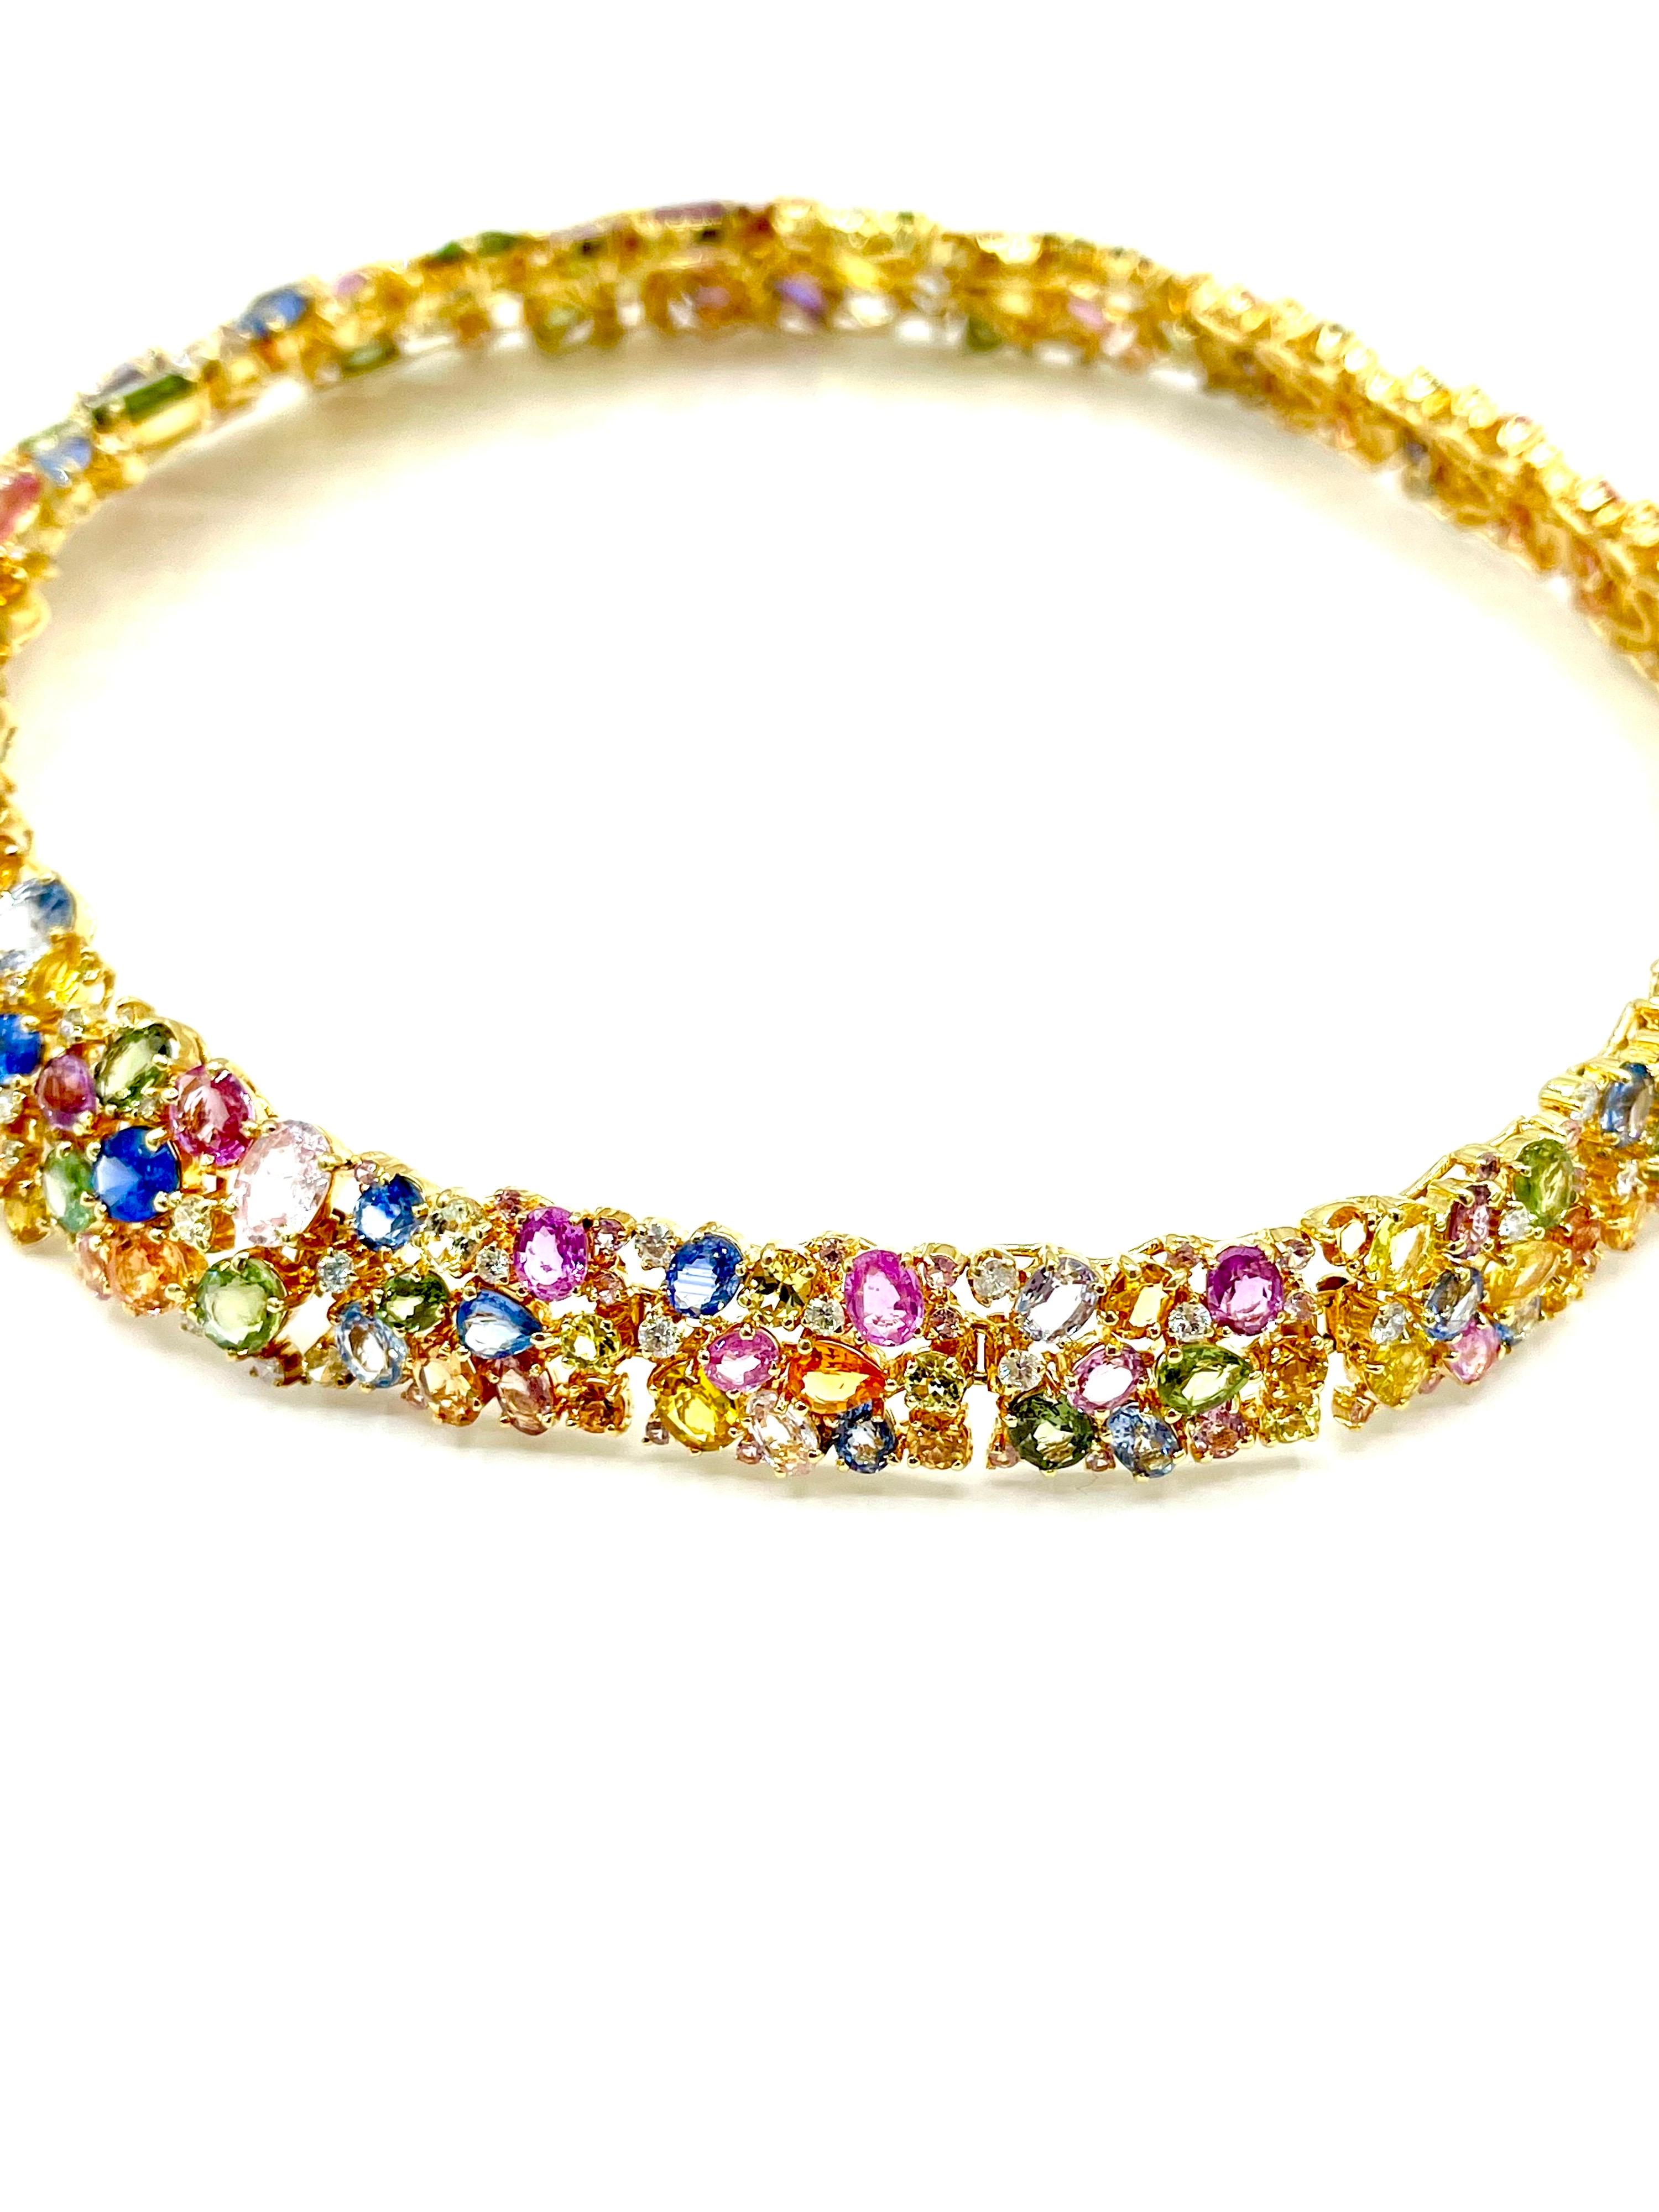 Mixed Cut 191.00 Carat Natural Multi-Color Sapphire and Diamond 18 Karat Gold Necklace